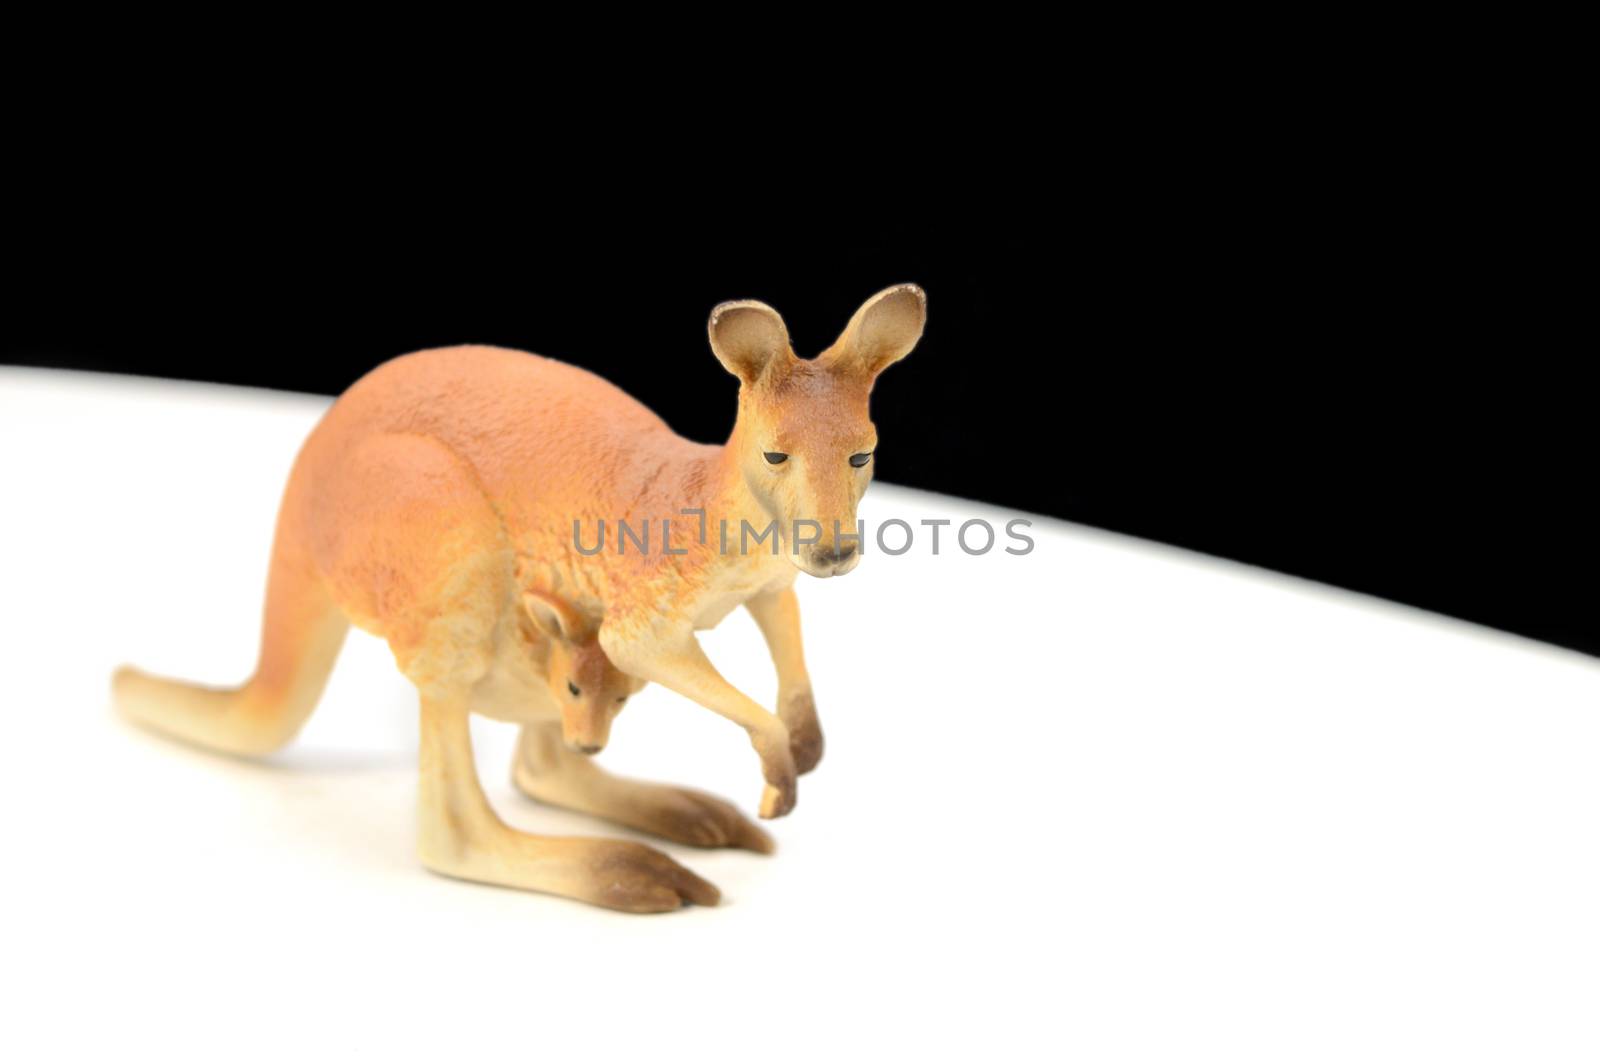 A closeup image of a kangaroo and joey hopping along the white path.